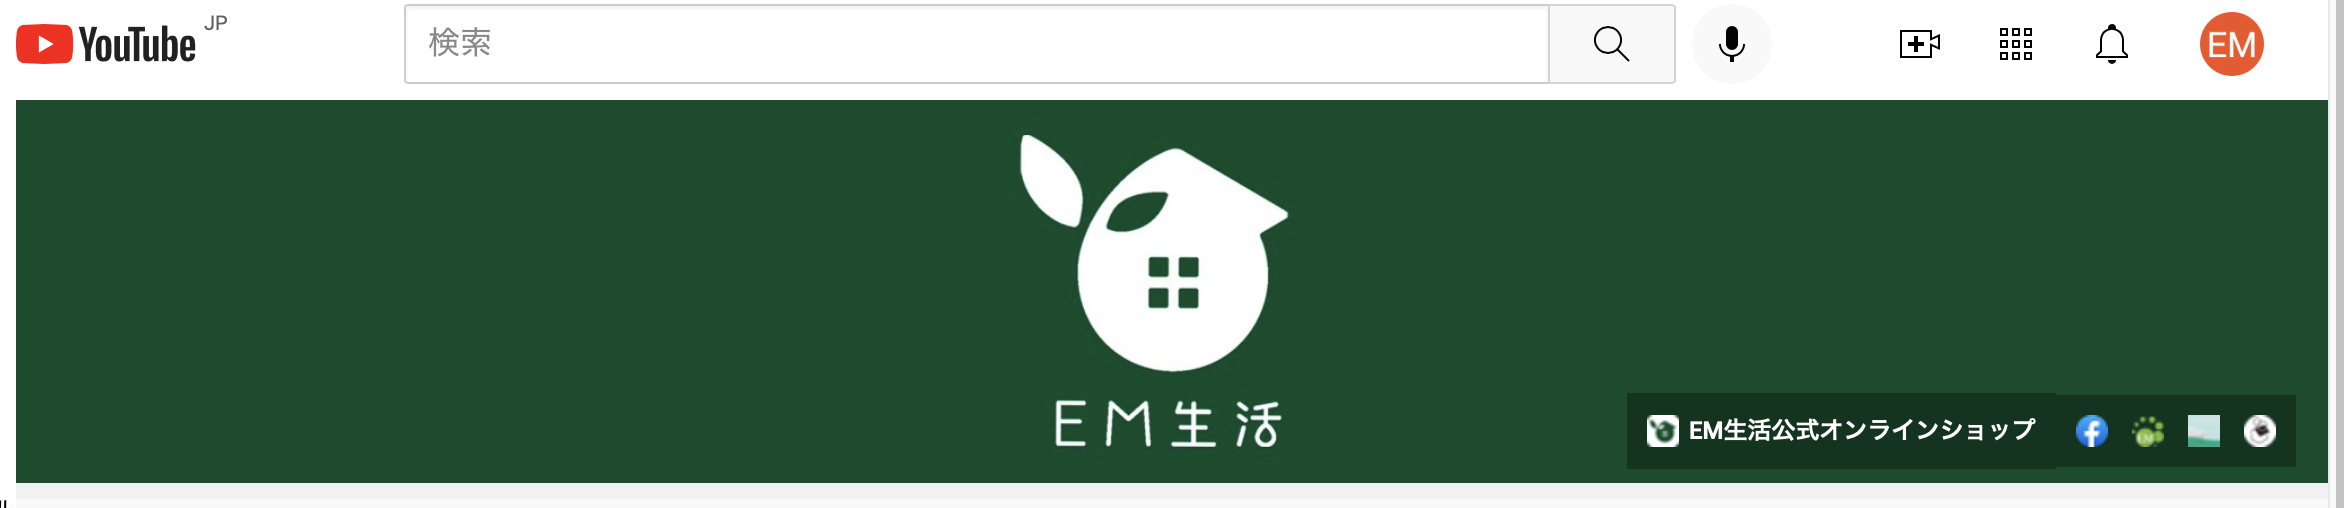 EM生活ライフスタイルチャンネルにてYouTube更新(4/28)